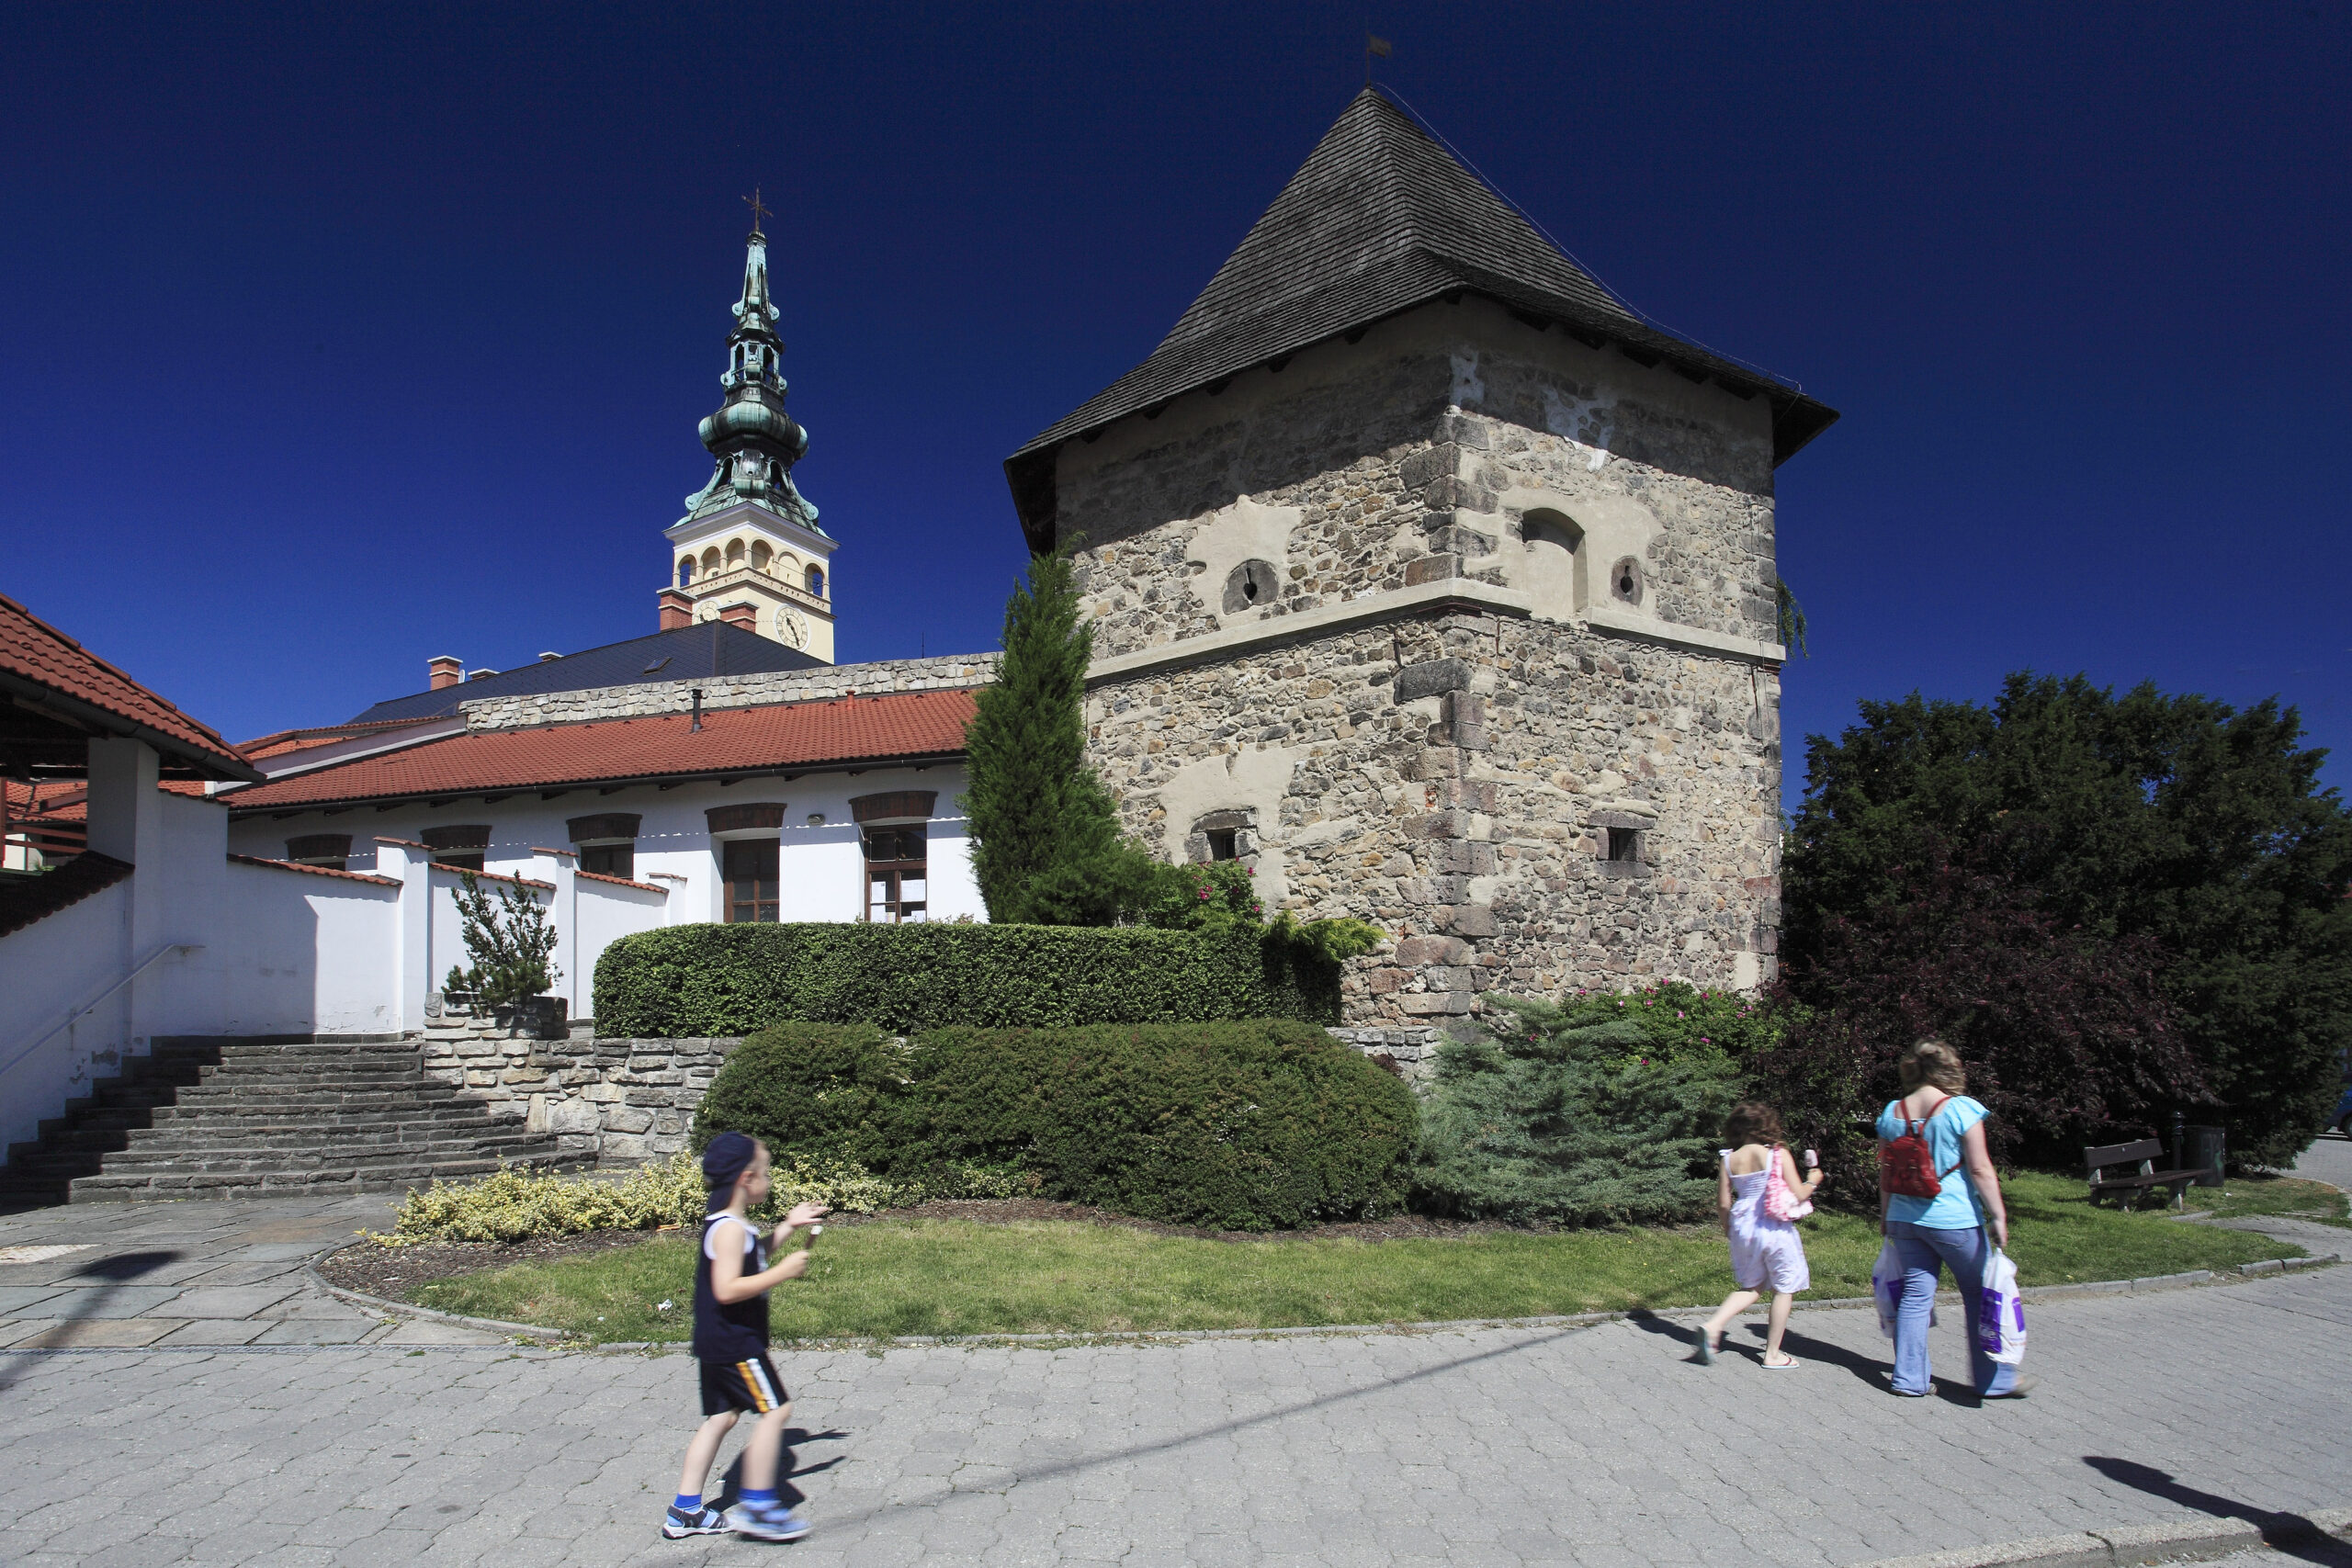 The Historical Center of Nový Jičin